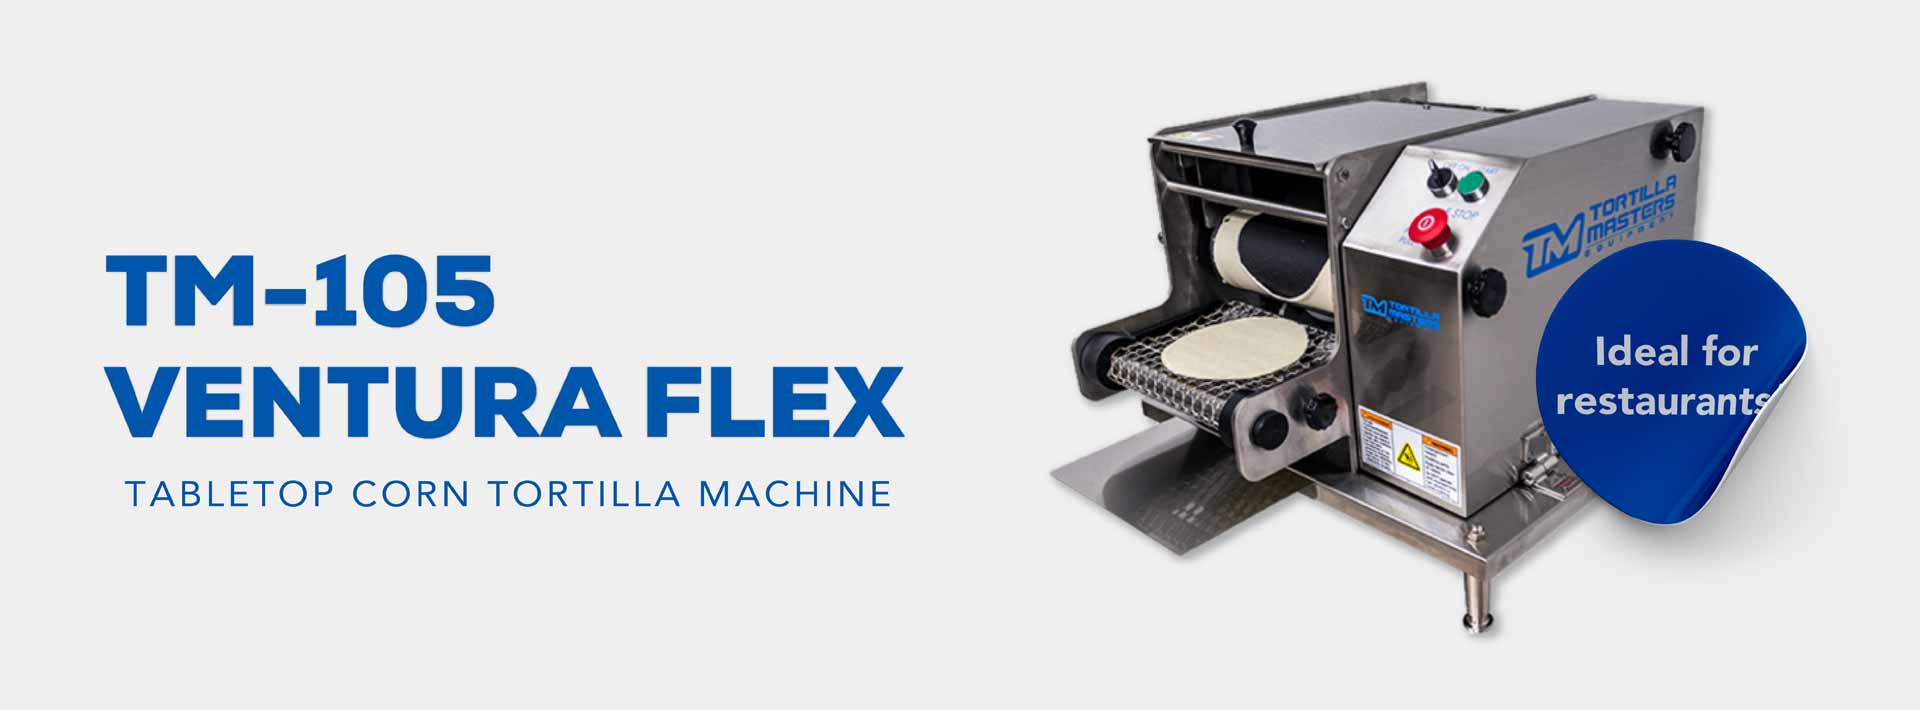 Ventura Flex Corn Tortilla Machine